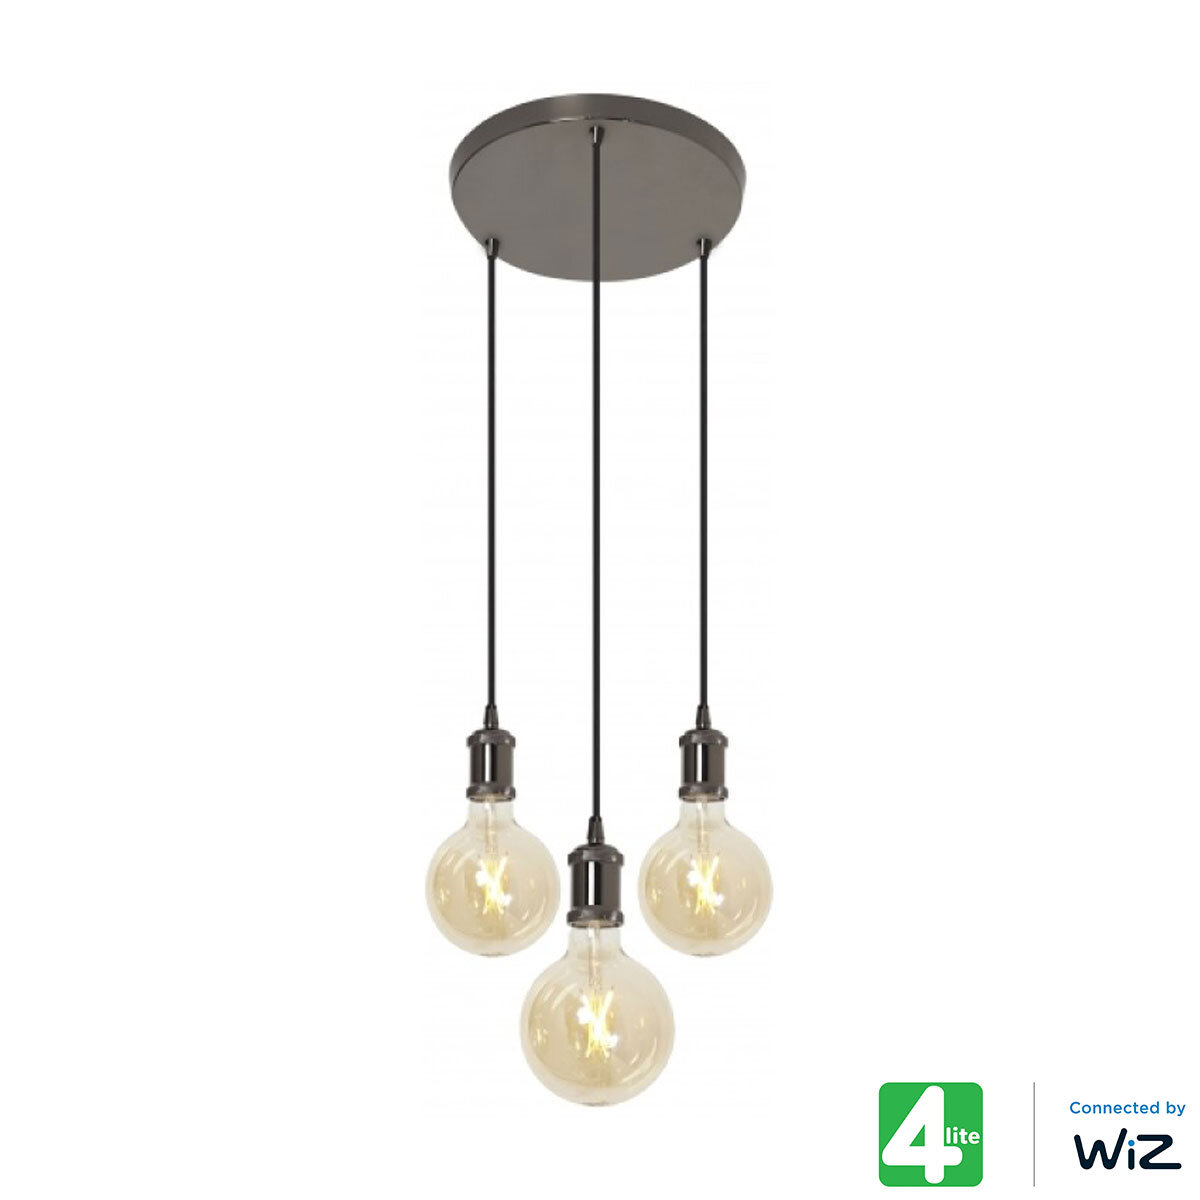 4lite WiZ Smart LED 3-Way Circular Pendant